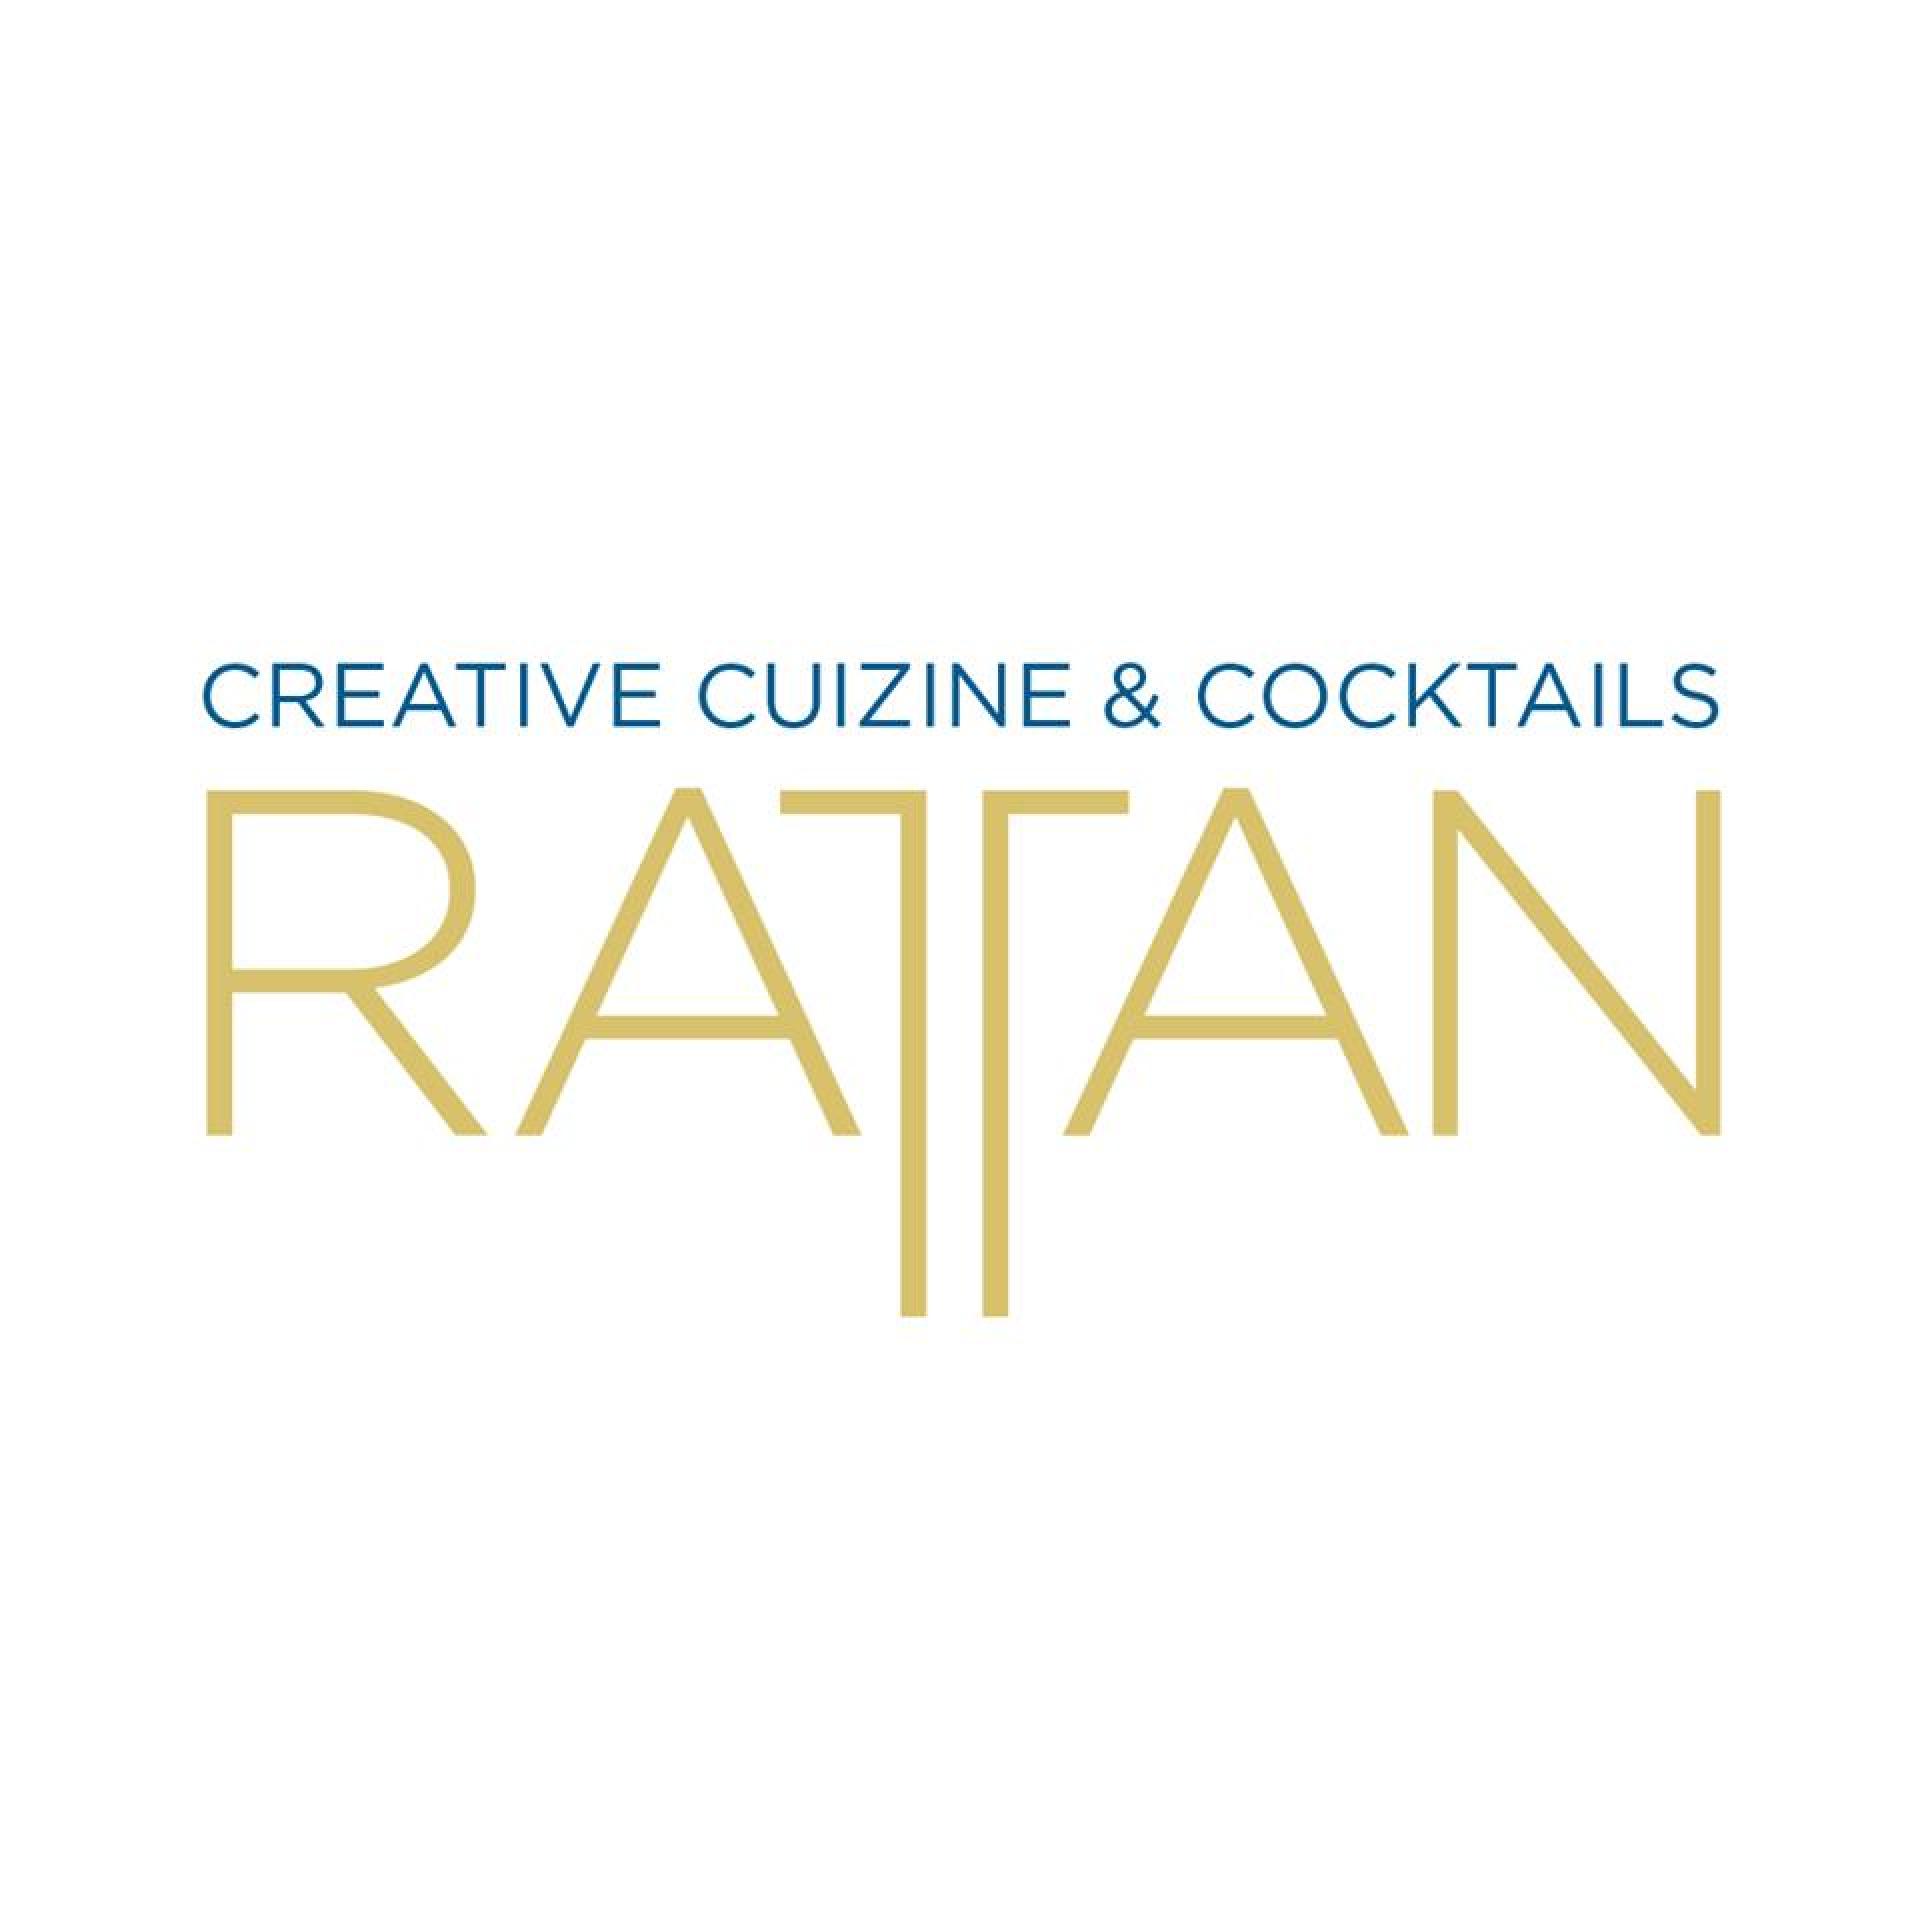 Rattan cuizine & cocktails